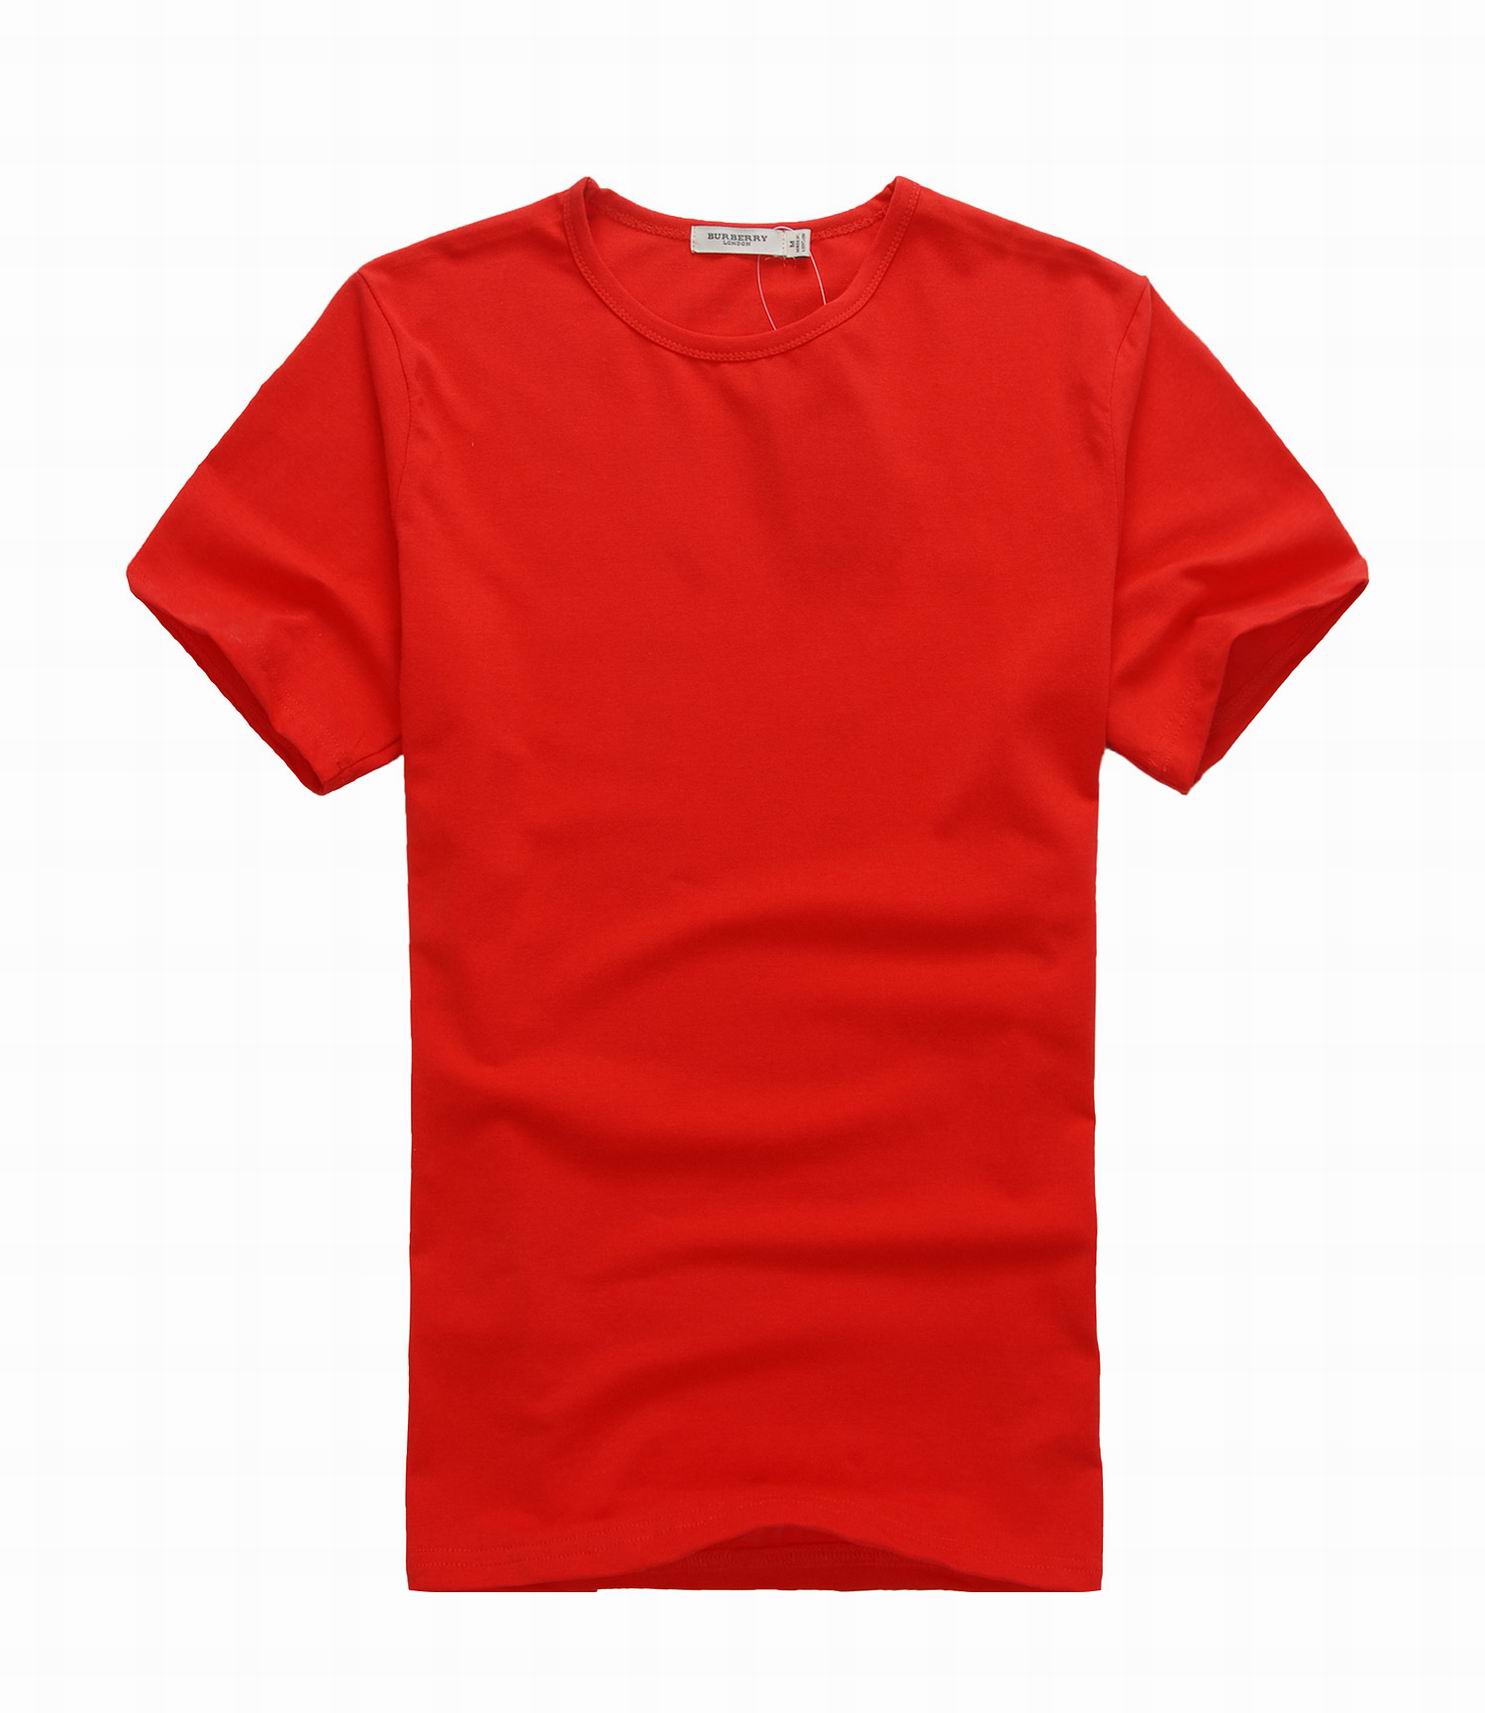 Red T Shirt Template   Clipart Best